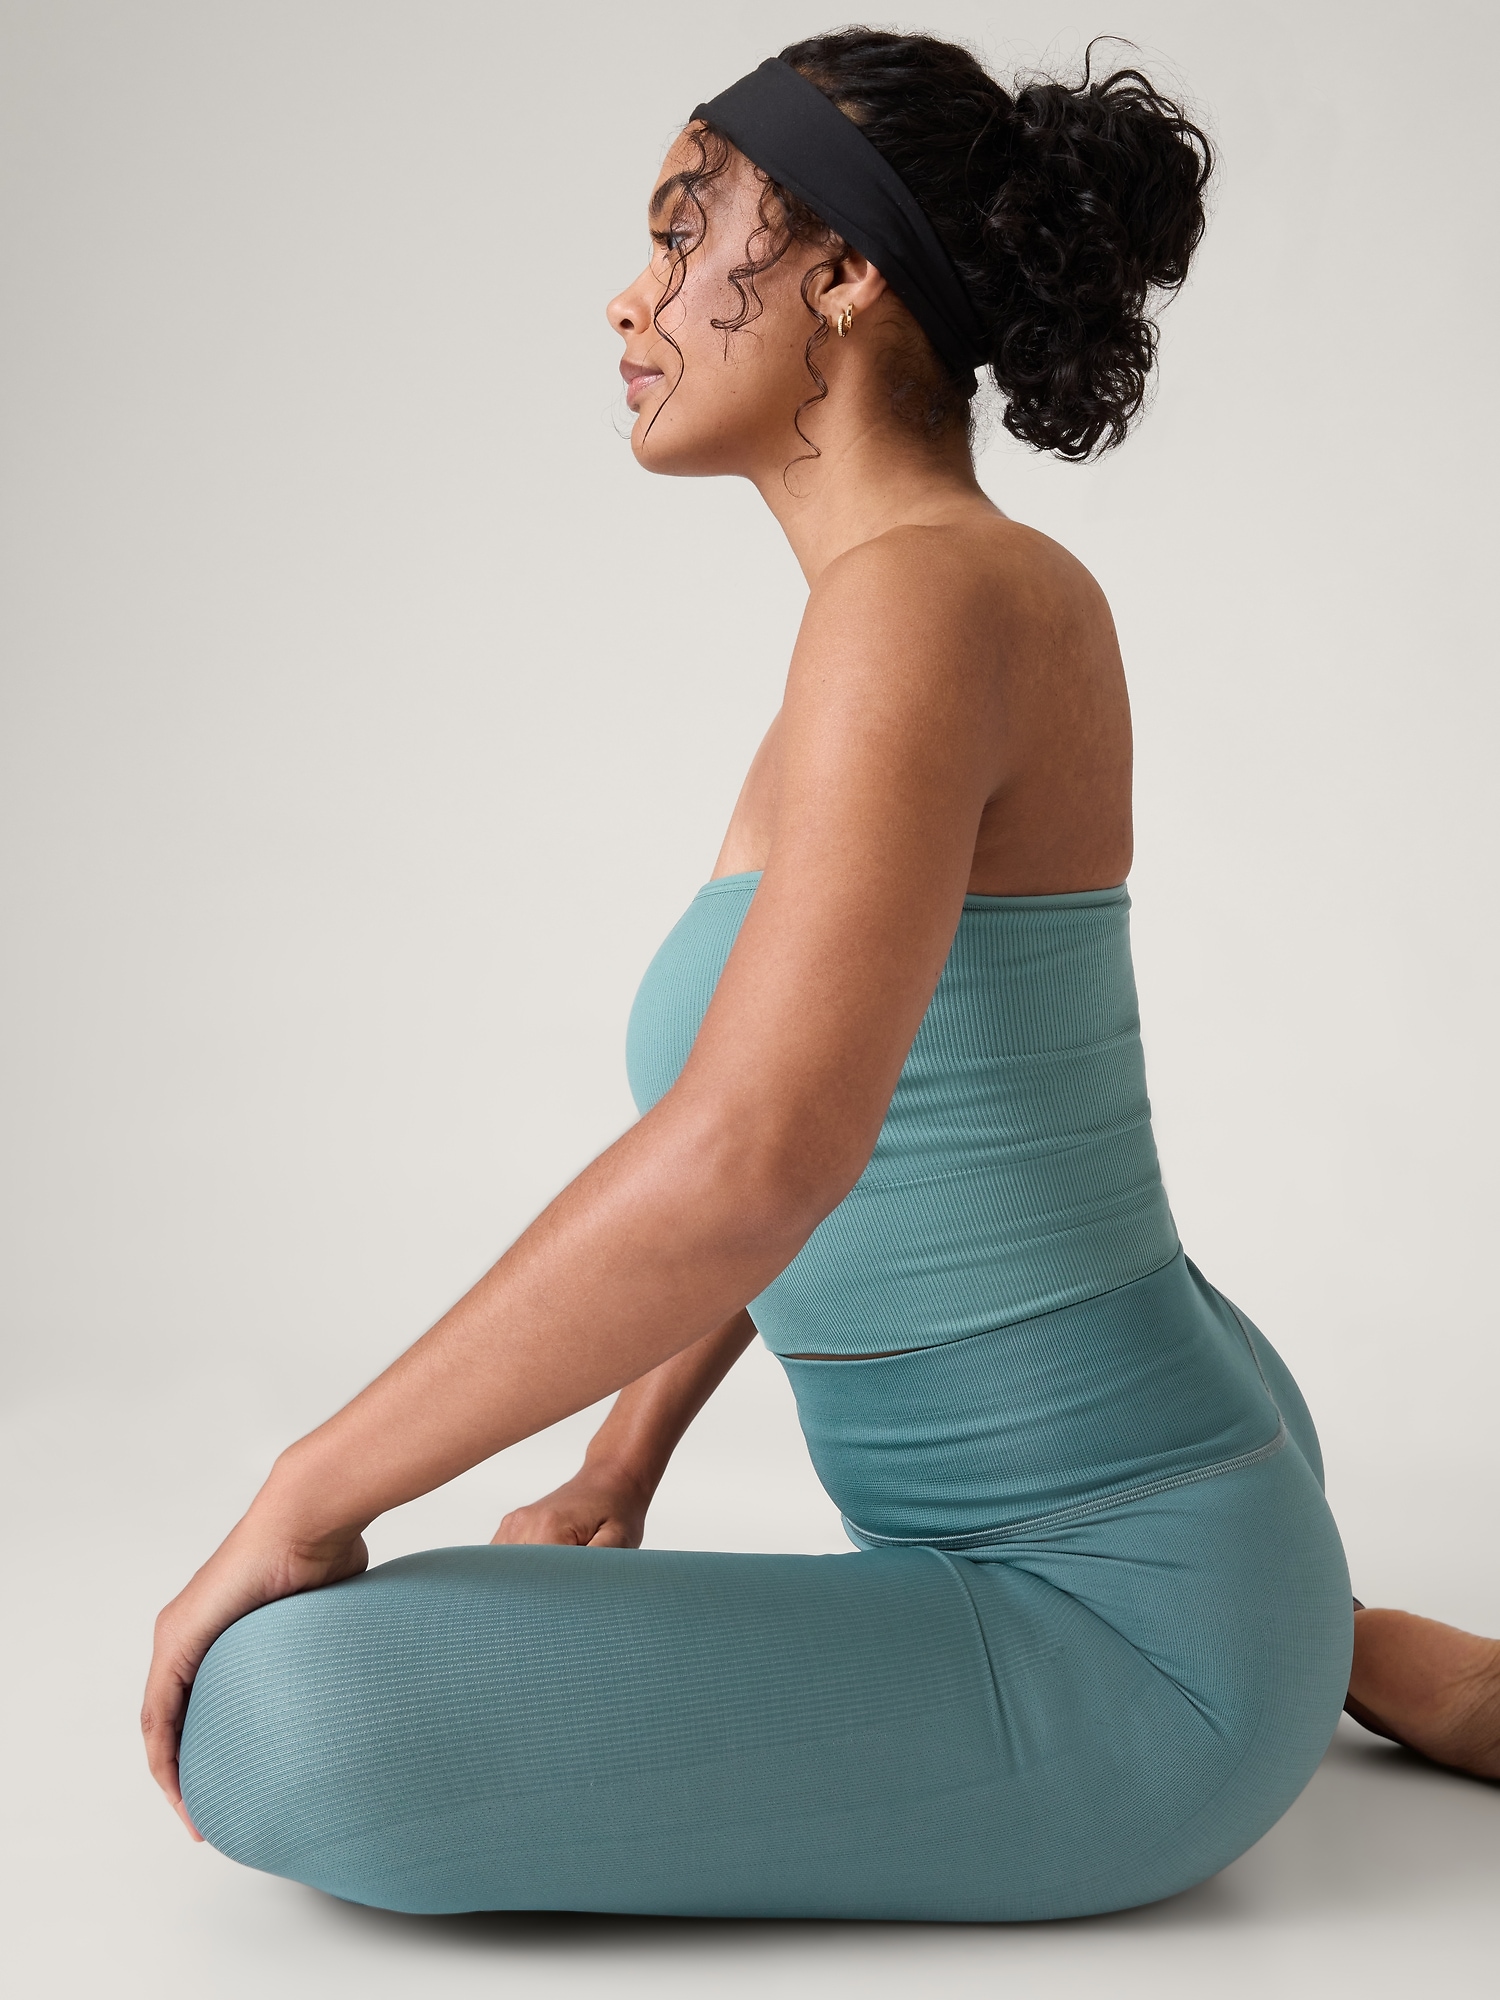 AUROLA Strapy Romper for Women Workout Yoga Gym Seamless One Piece